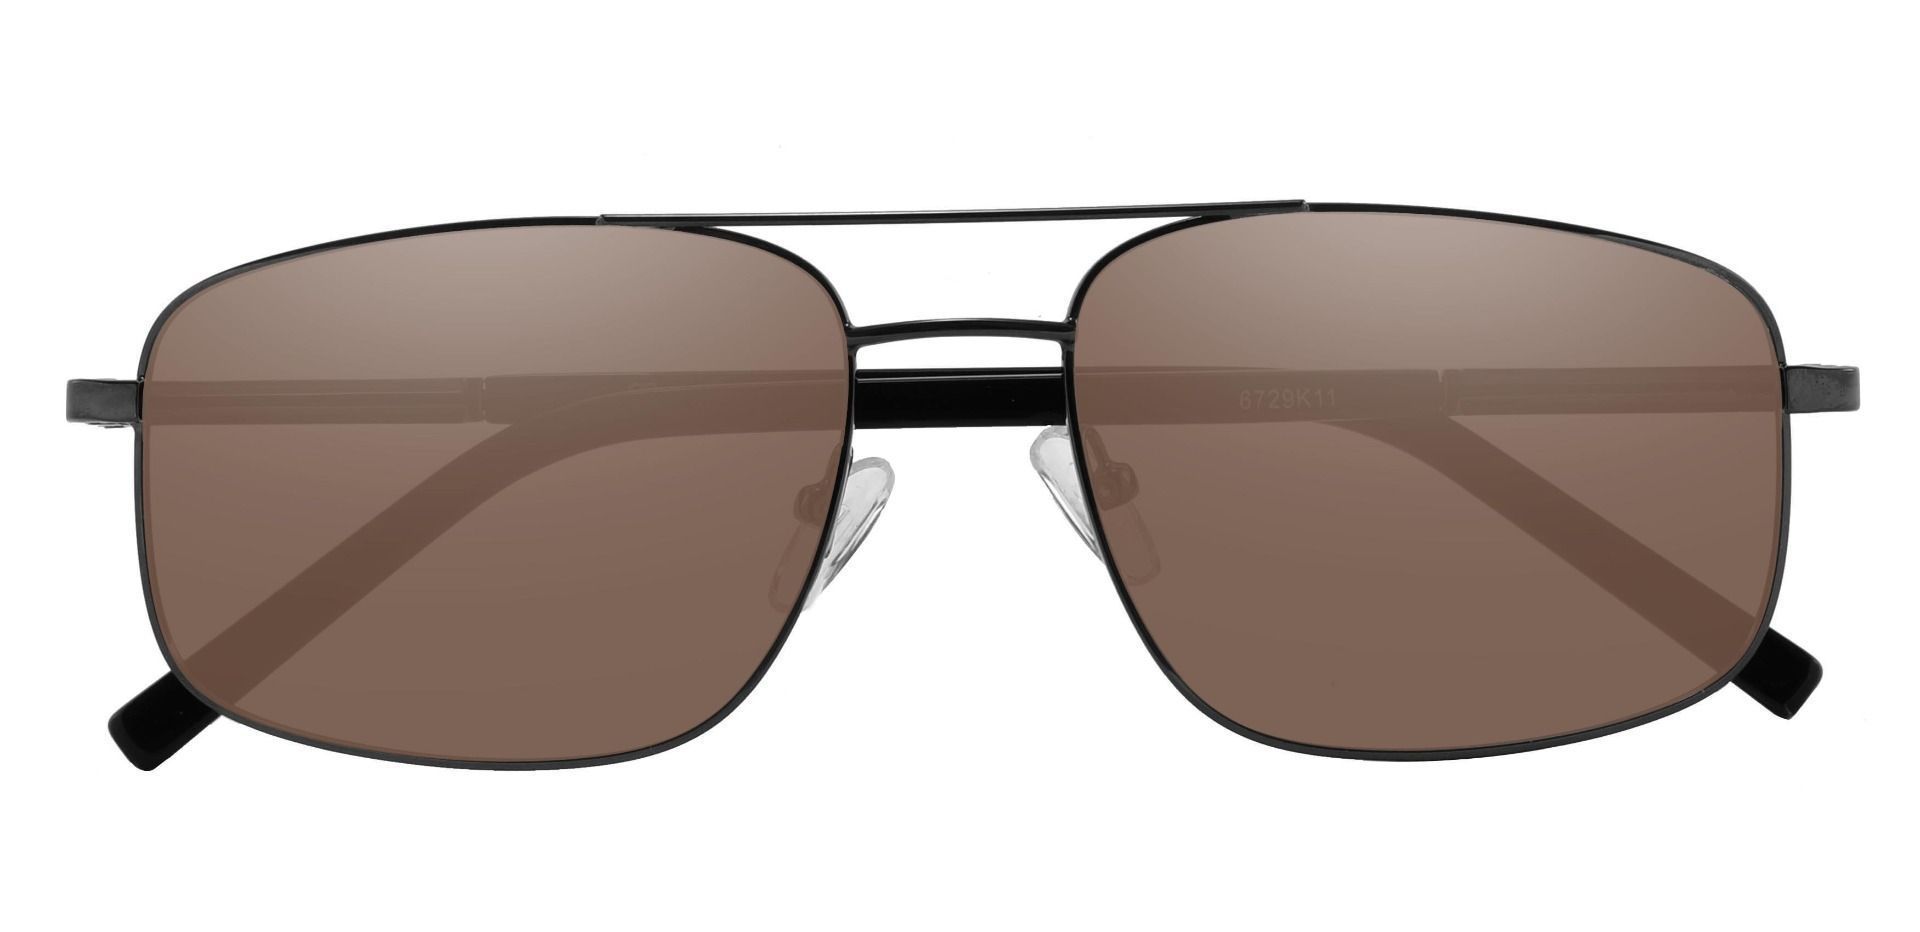 Davenport Aviator Prescription Sunglasses - Black Frame With Brown Lenses